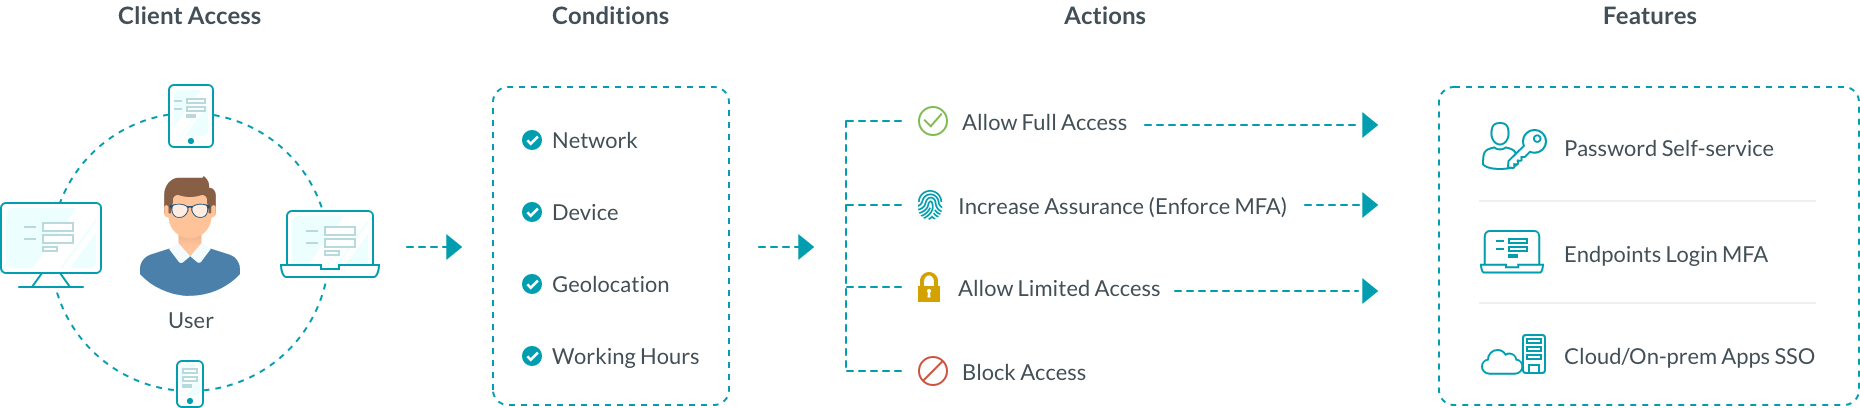 ADSelfService accès conditionnel